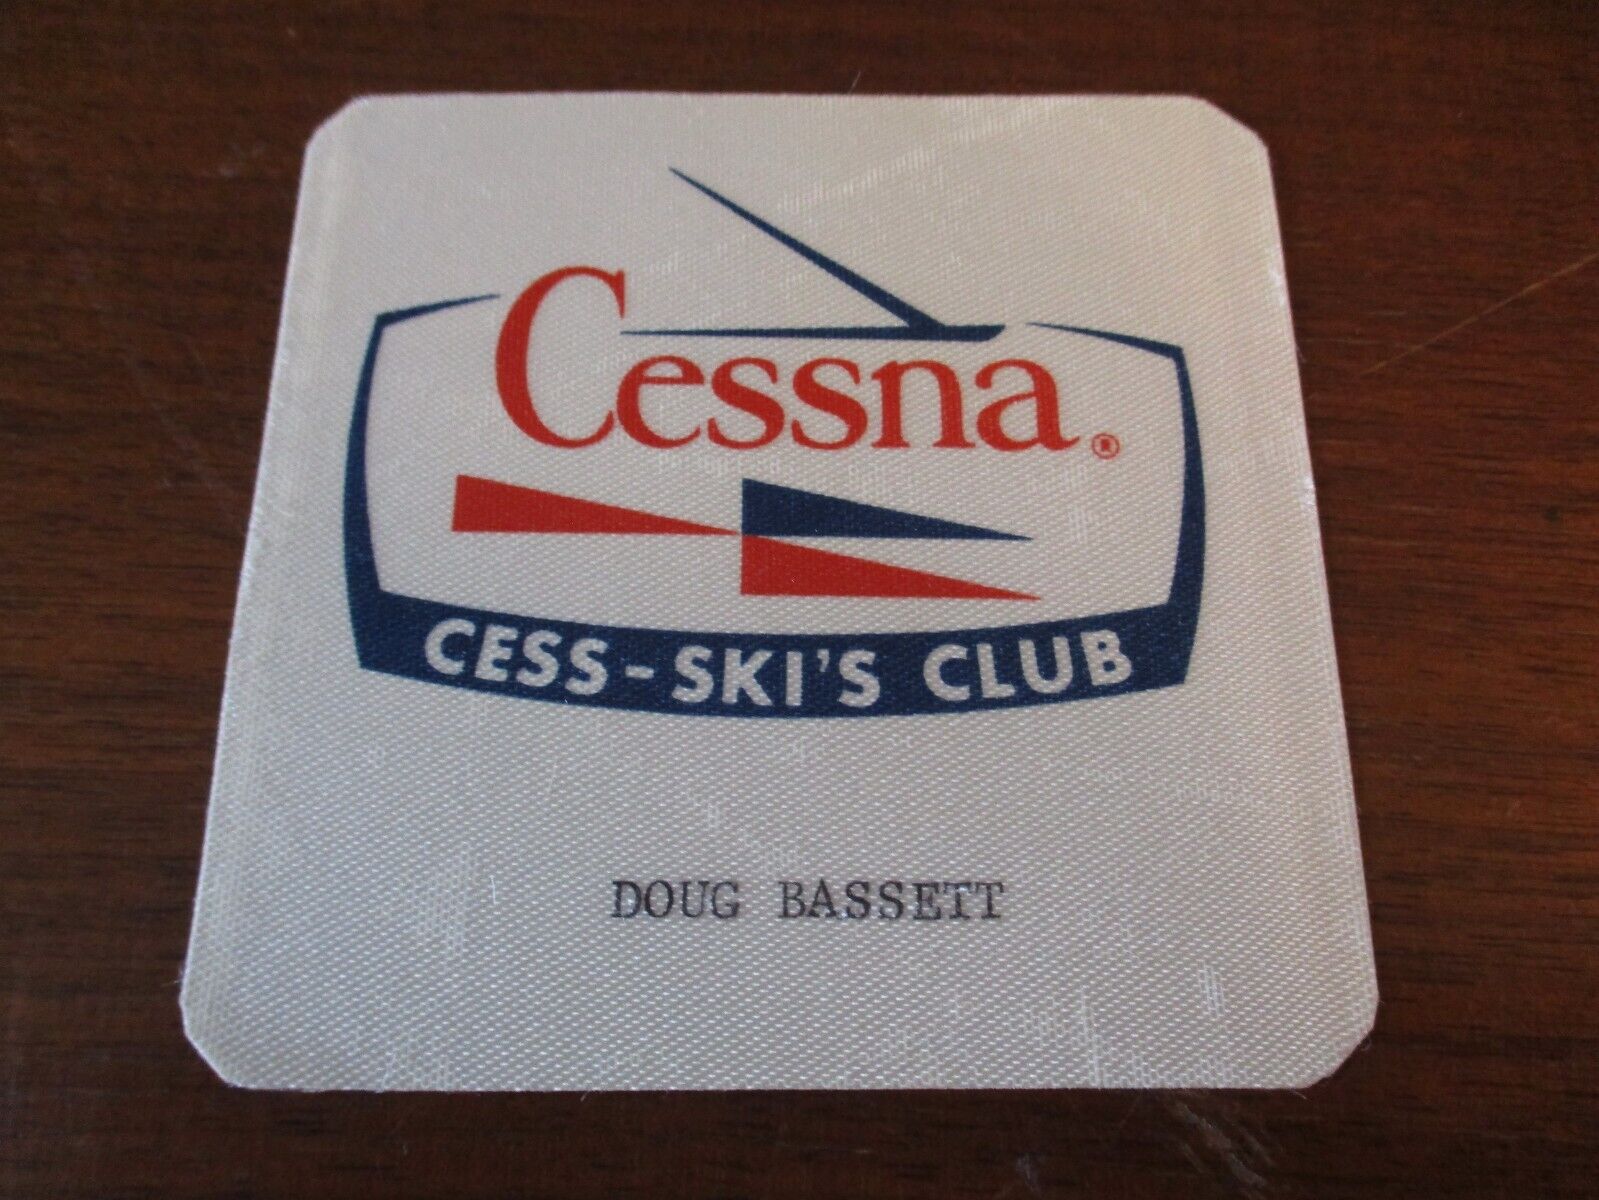 Vintage rare Cessna employee/pilot\'s Cess-ski\'s club ski skis landing gear decal